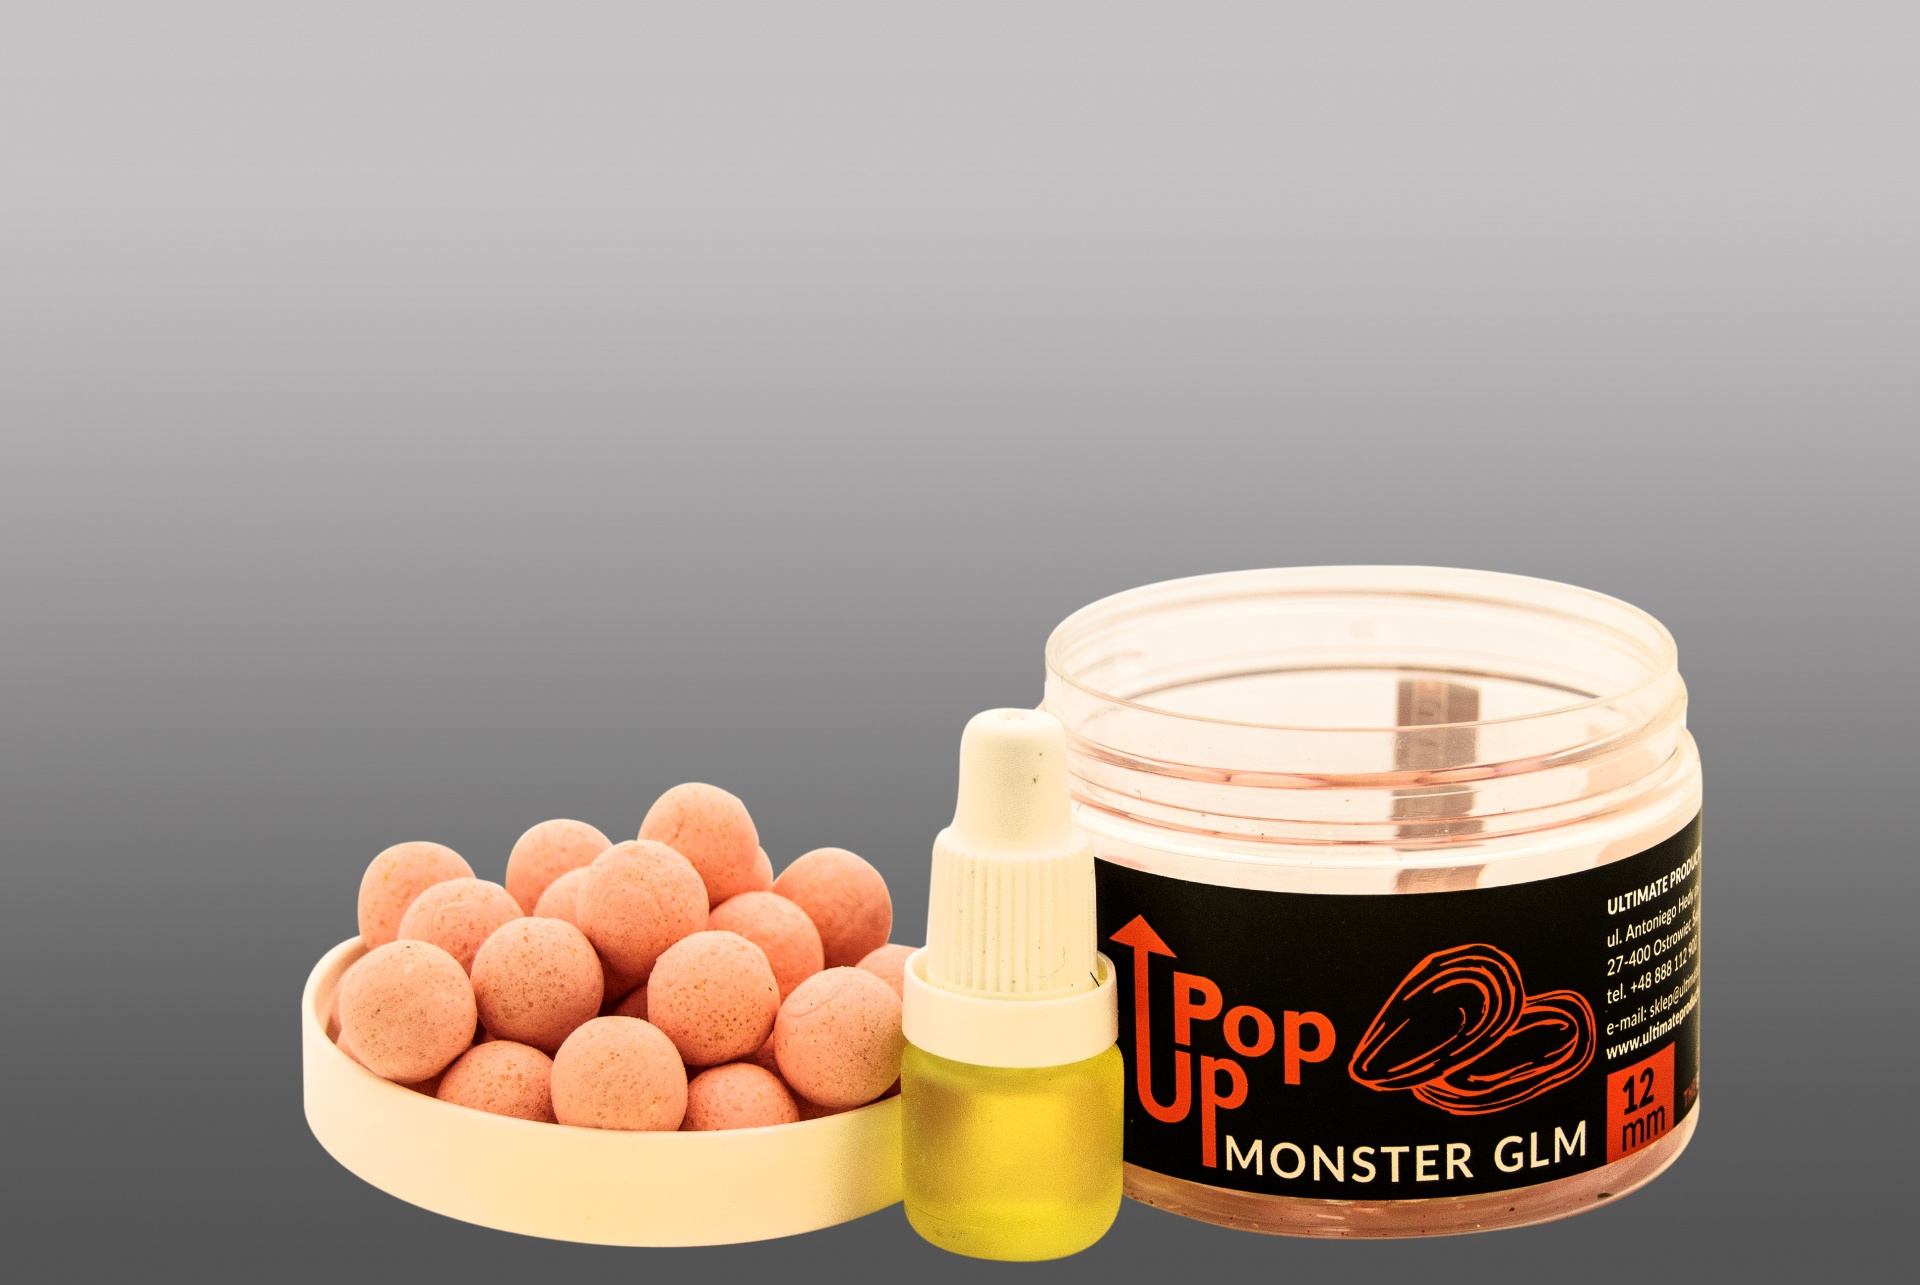 UltimateProducts Pop-Ups - Monster GLM